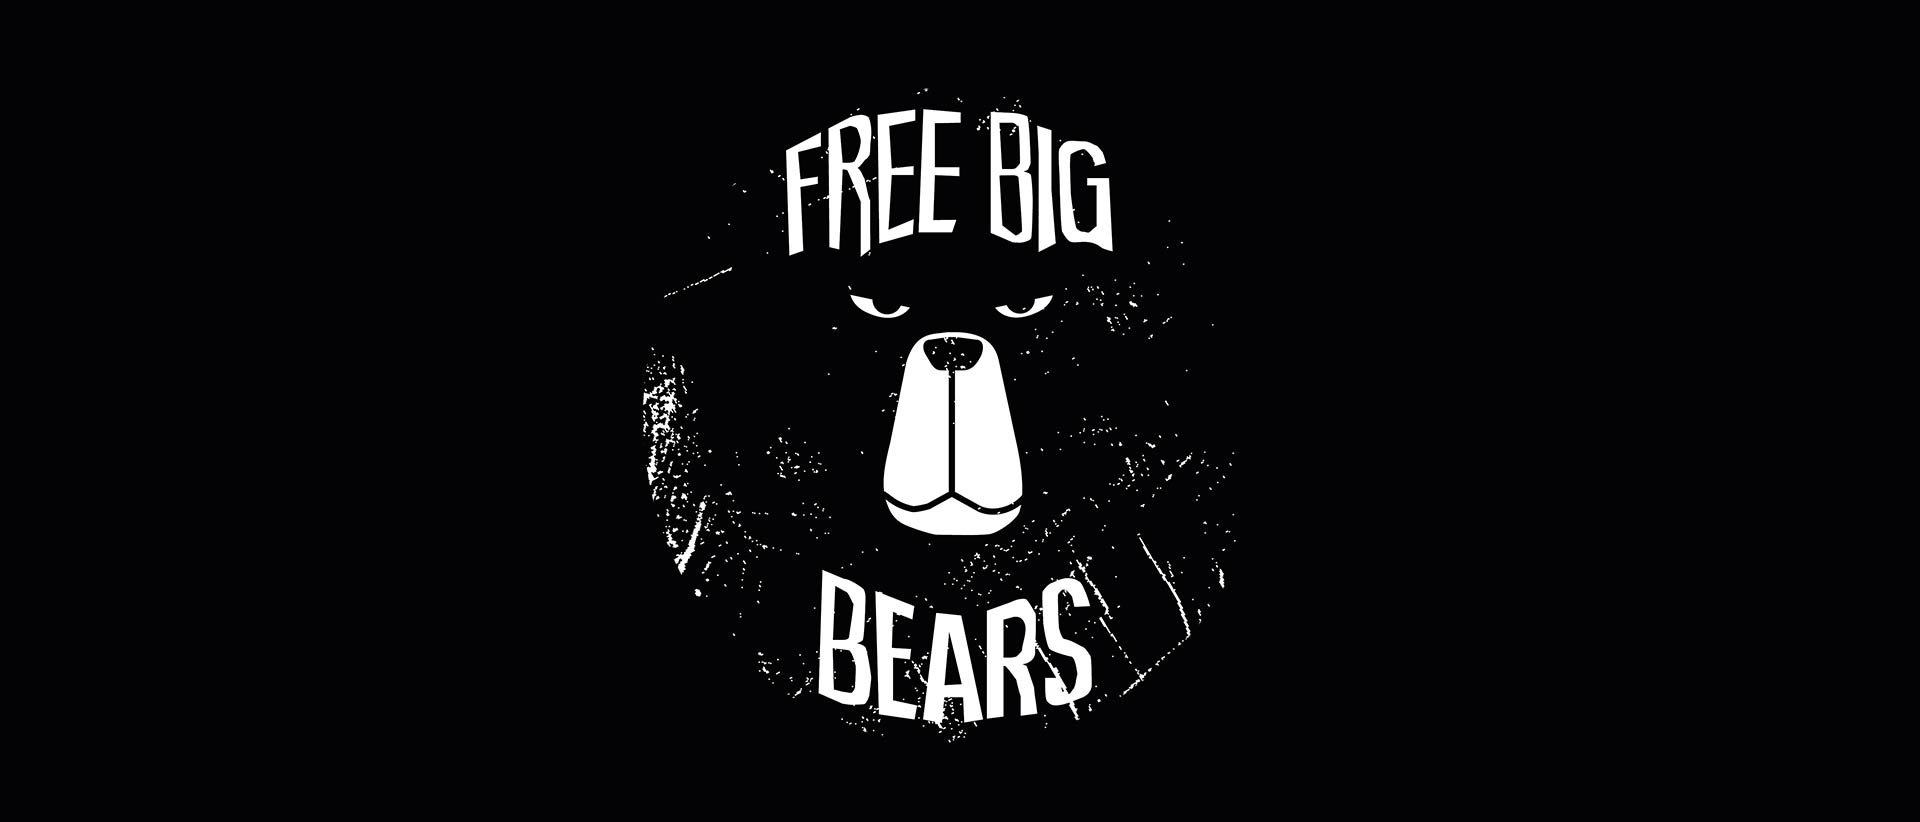 Free Big Bears - Adorez vos maîtres